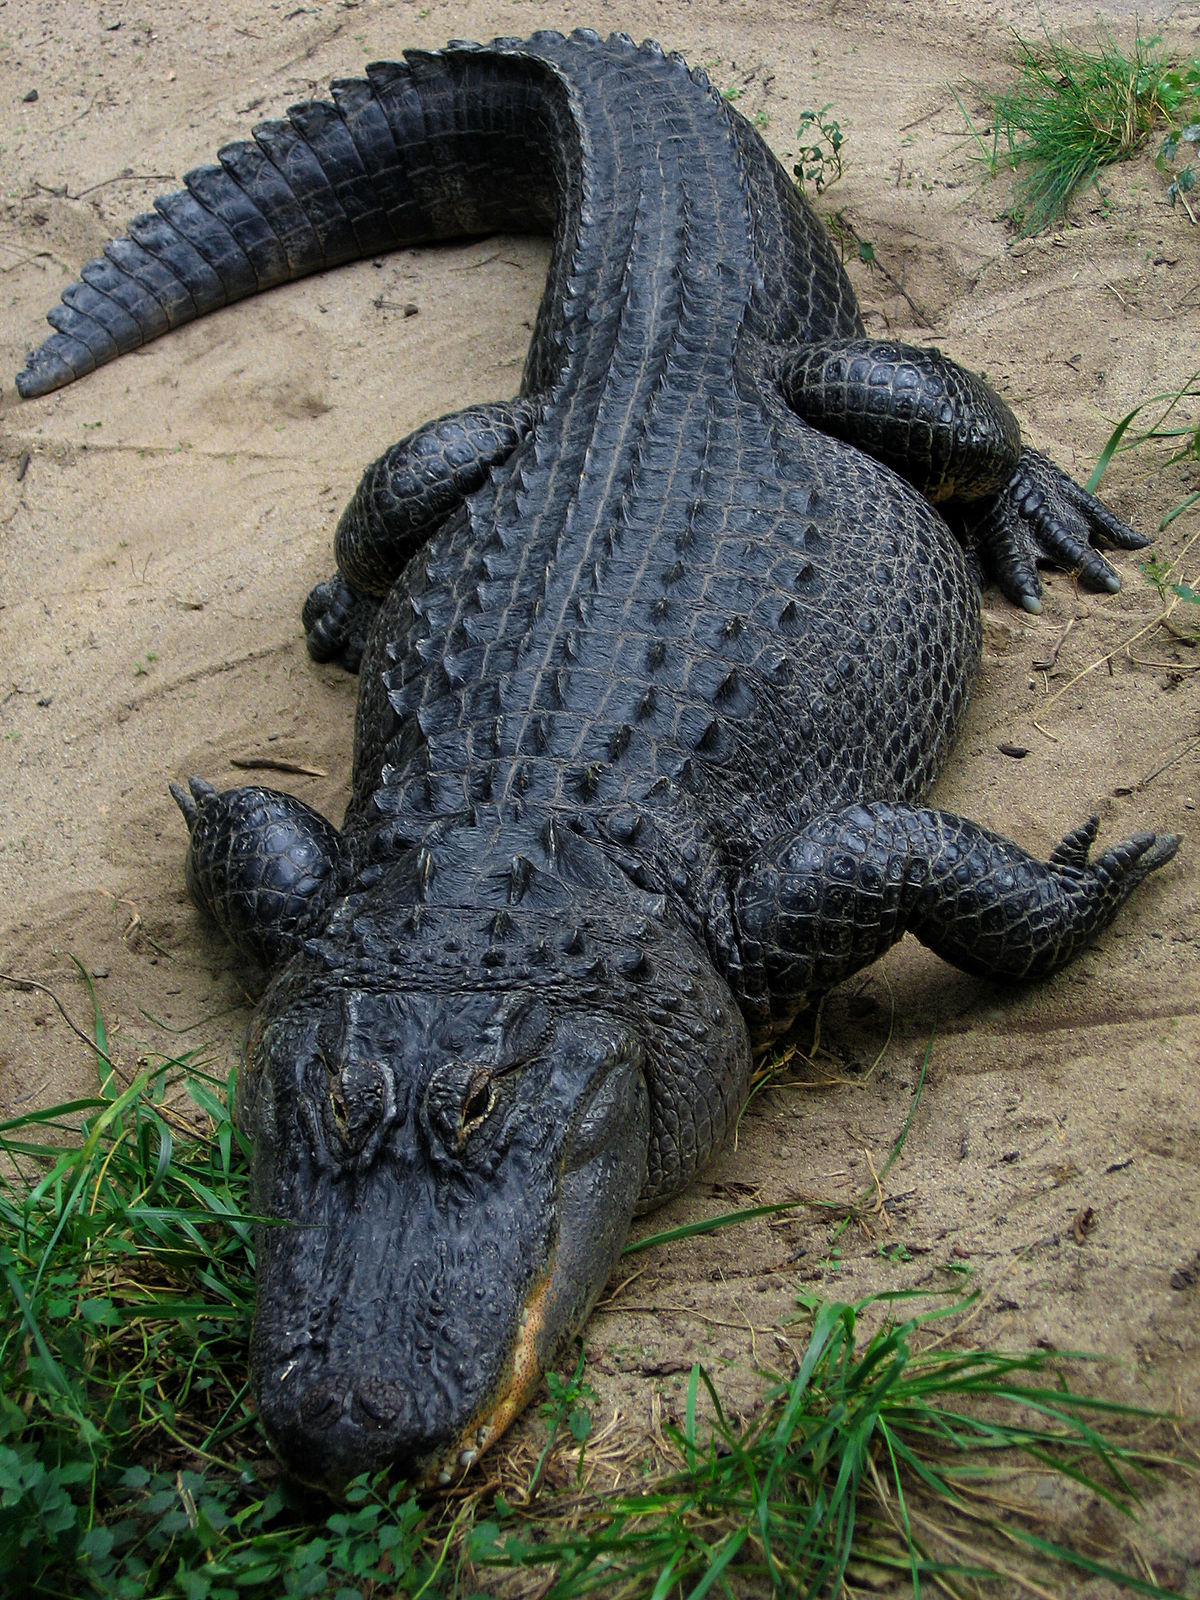 American alligator - Wikipedia